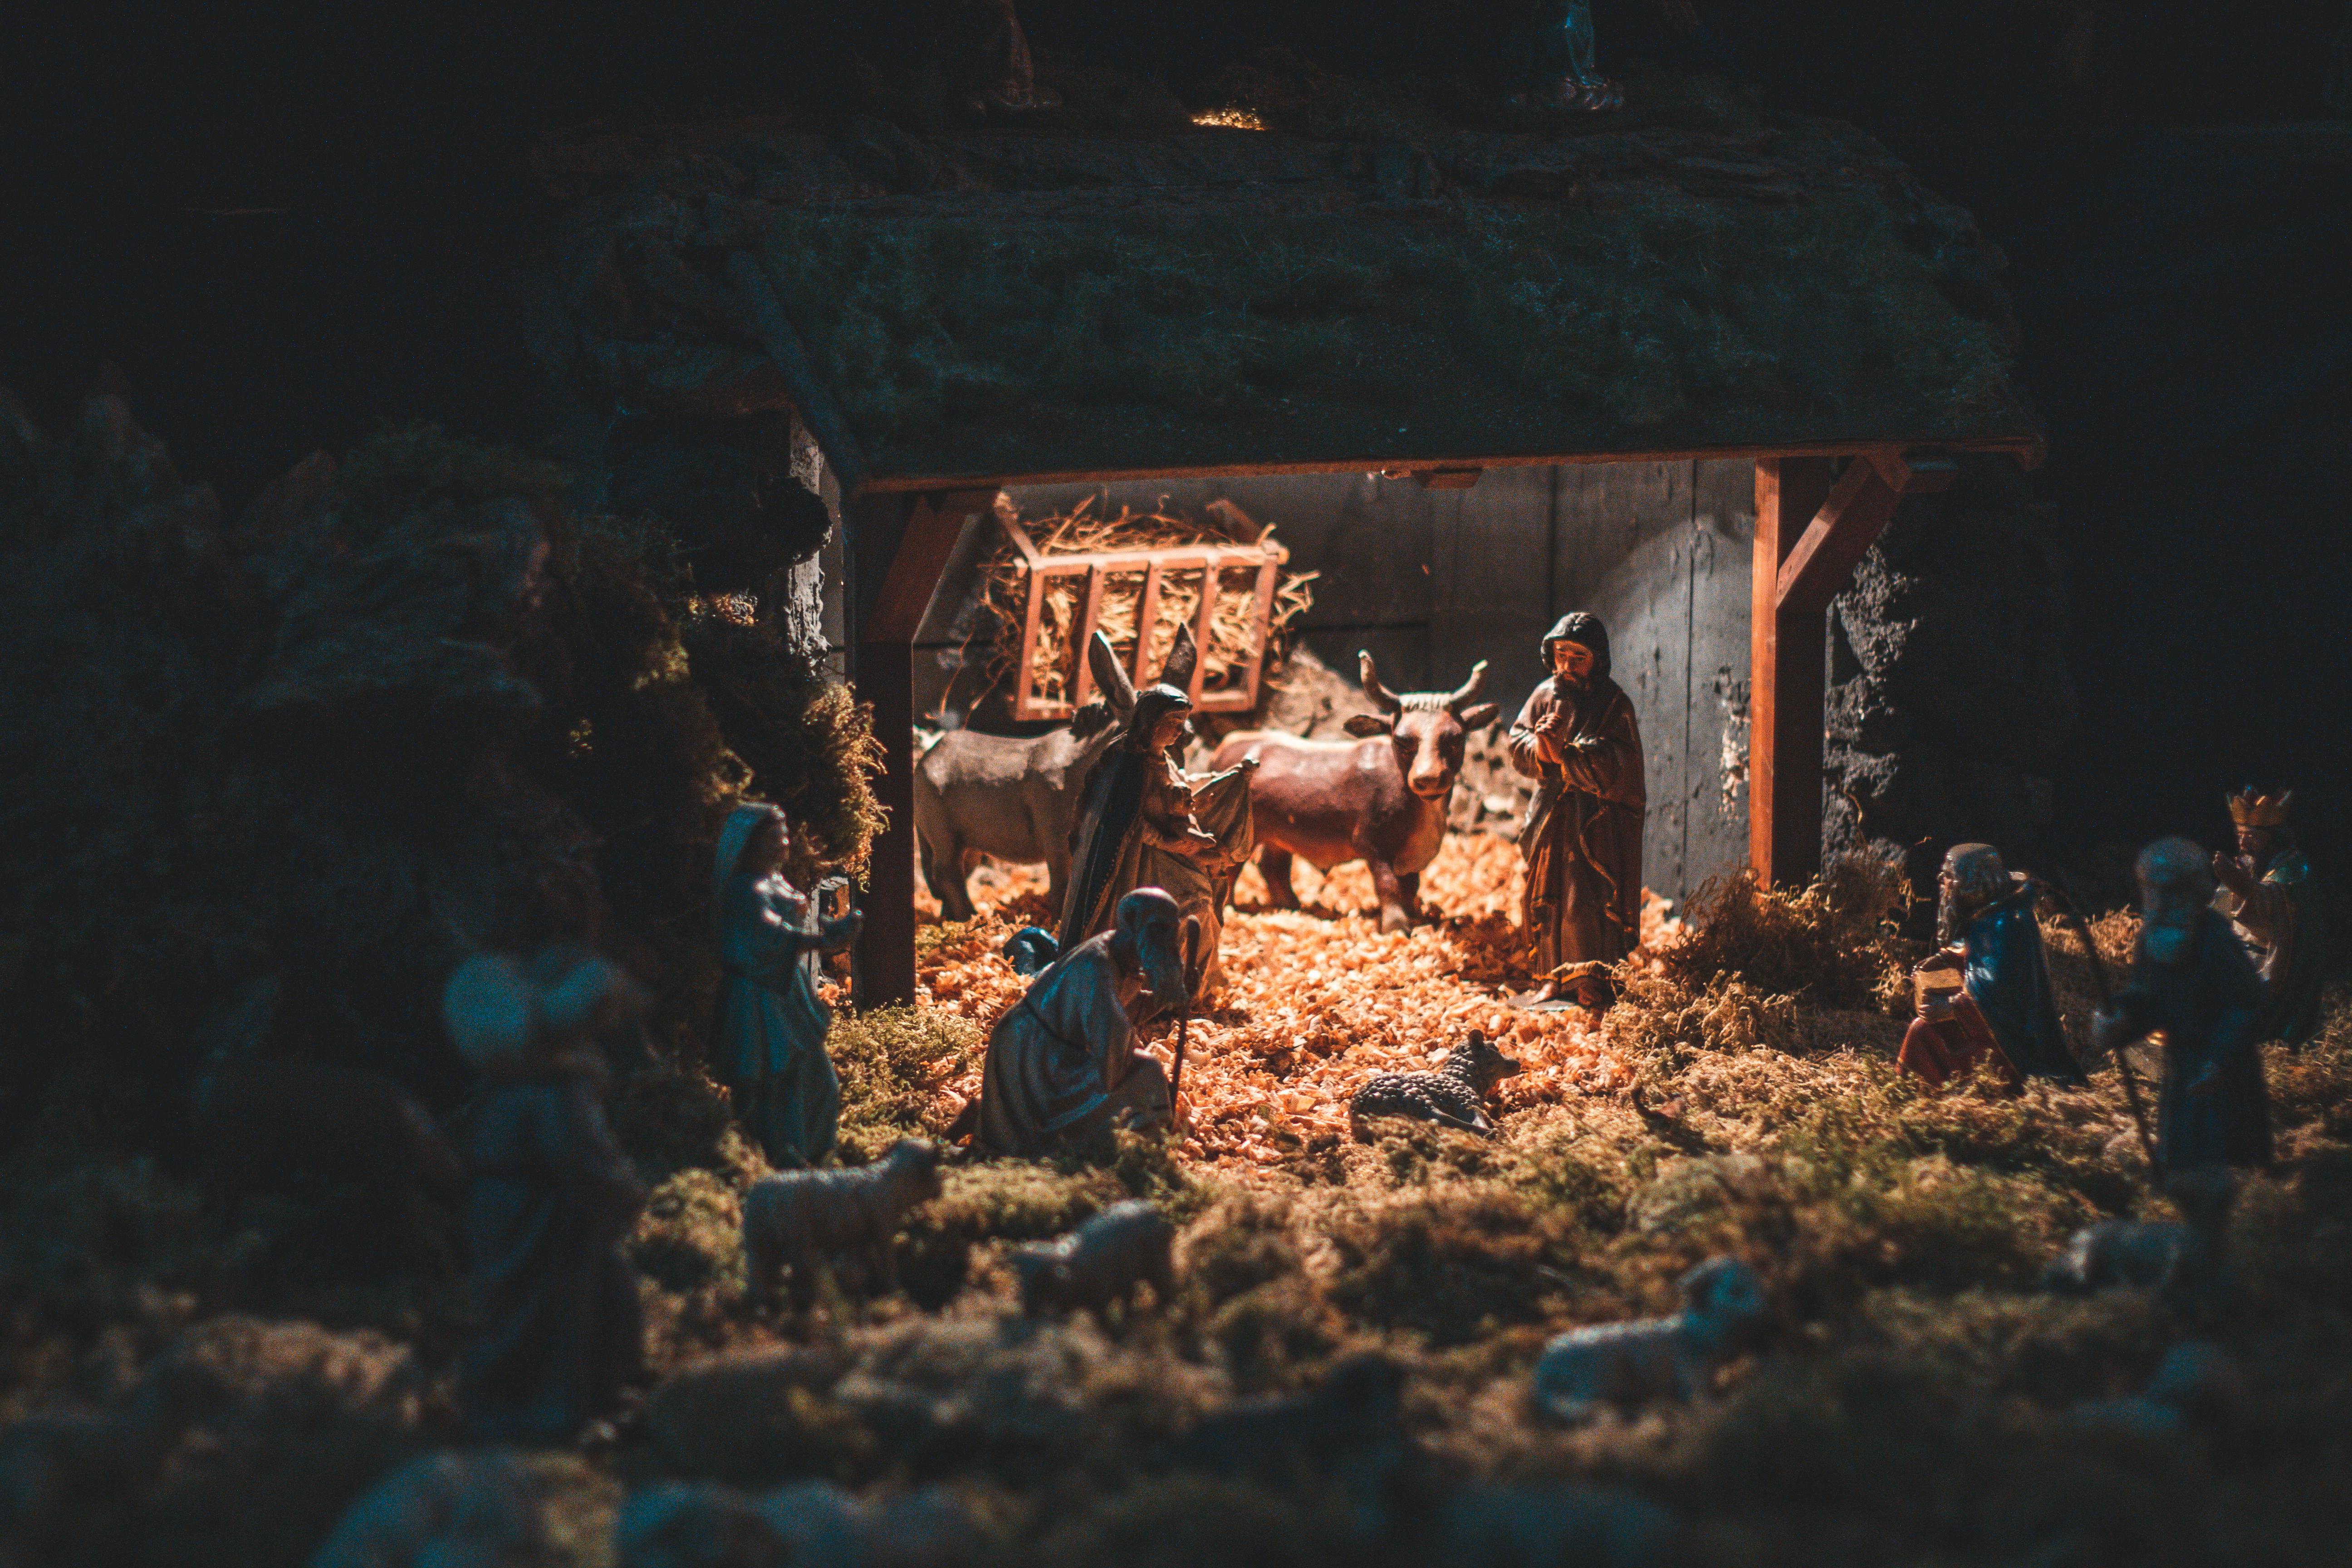 free nativity images